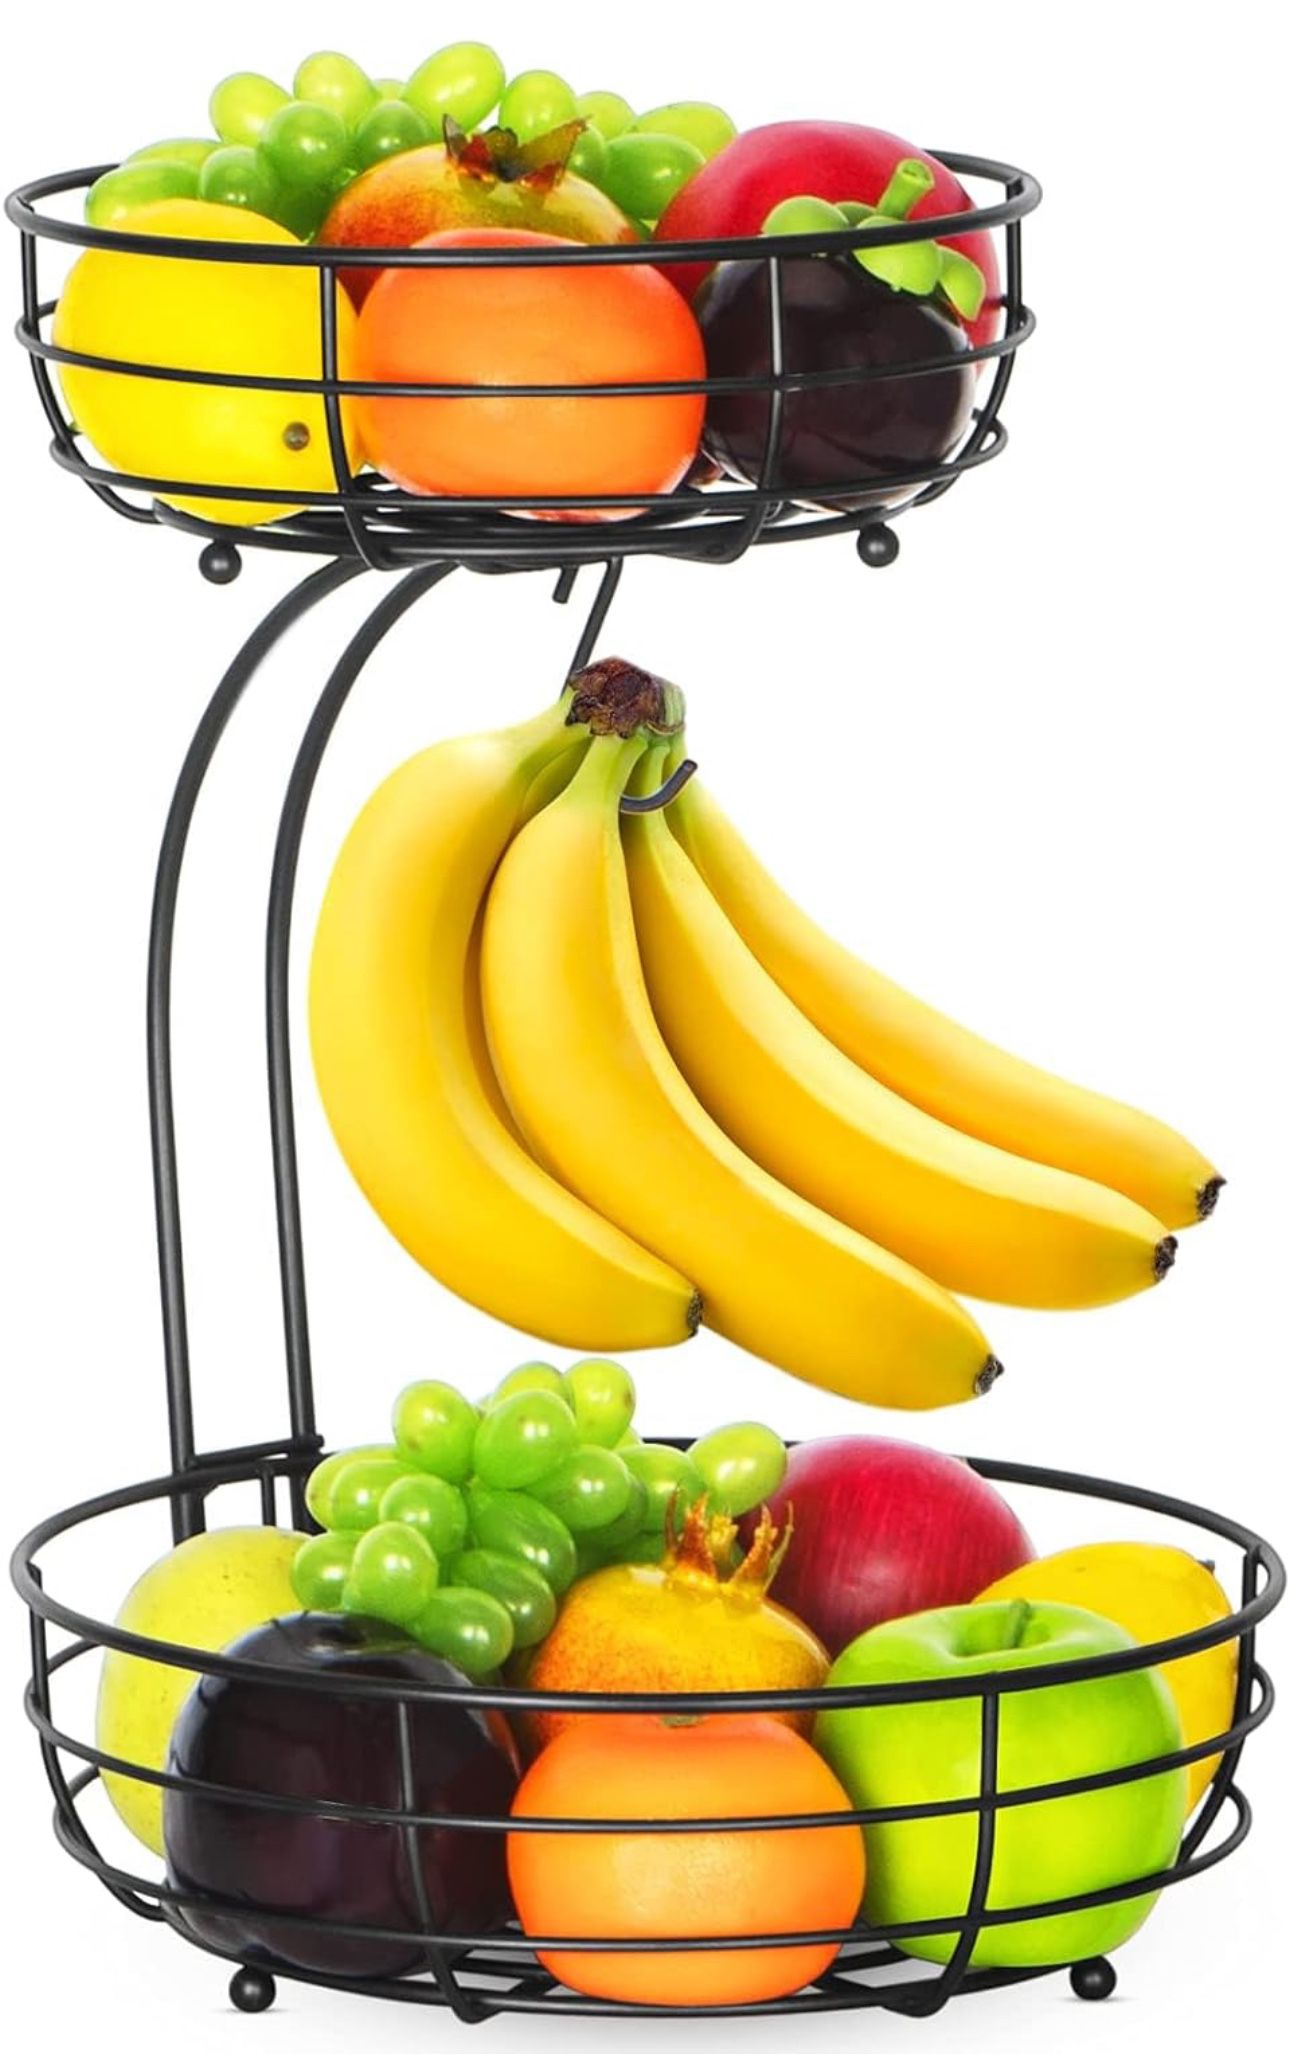 2-Tier Countertop Fruit Basket Bowl with Banana Hanger, Metal Wire Fruits Stand Holder Storage Organizer for Kitchen, Black